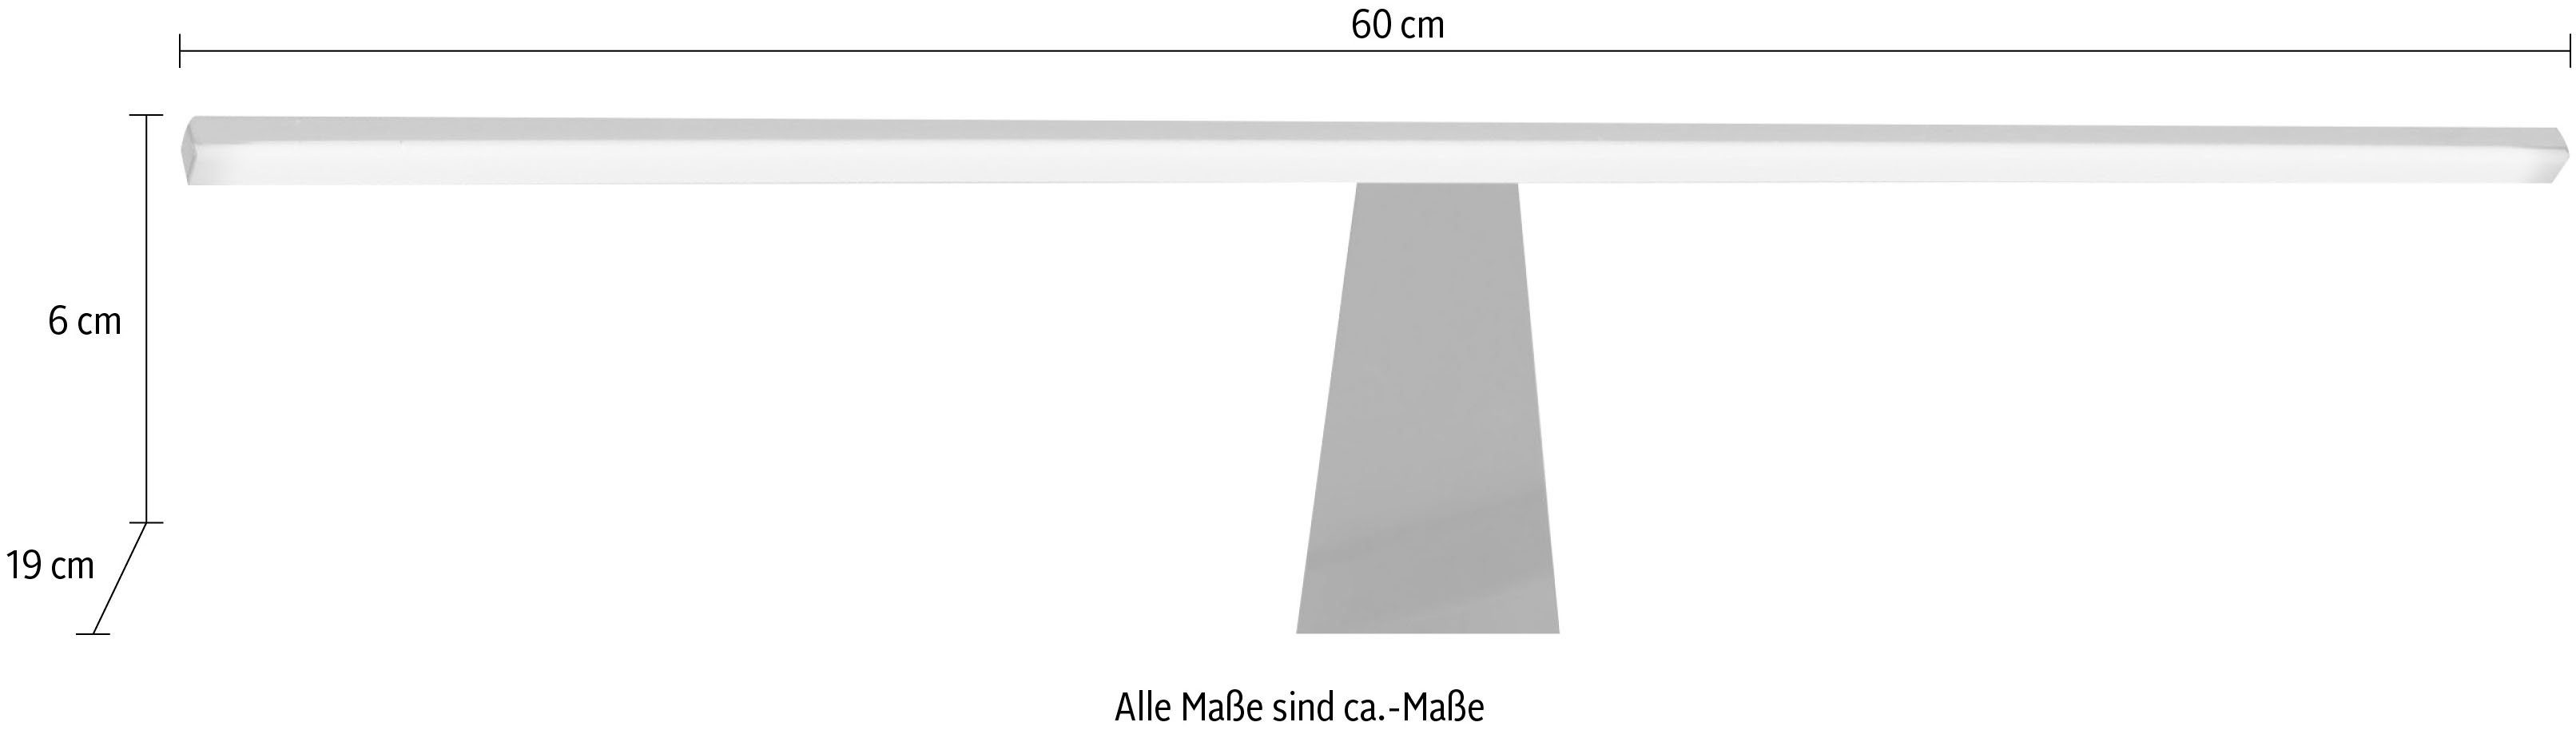 W, branded Imola integriert, drei Musterring GALLERY Set-Varianten by in Aufbauleuchte LED fest M